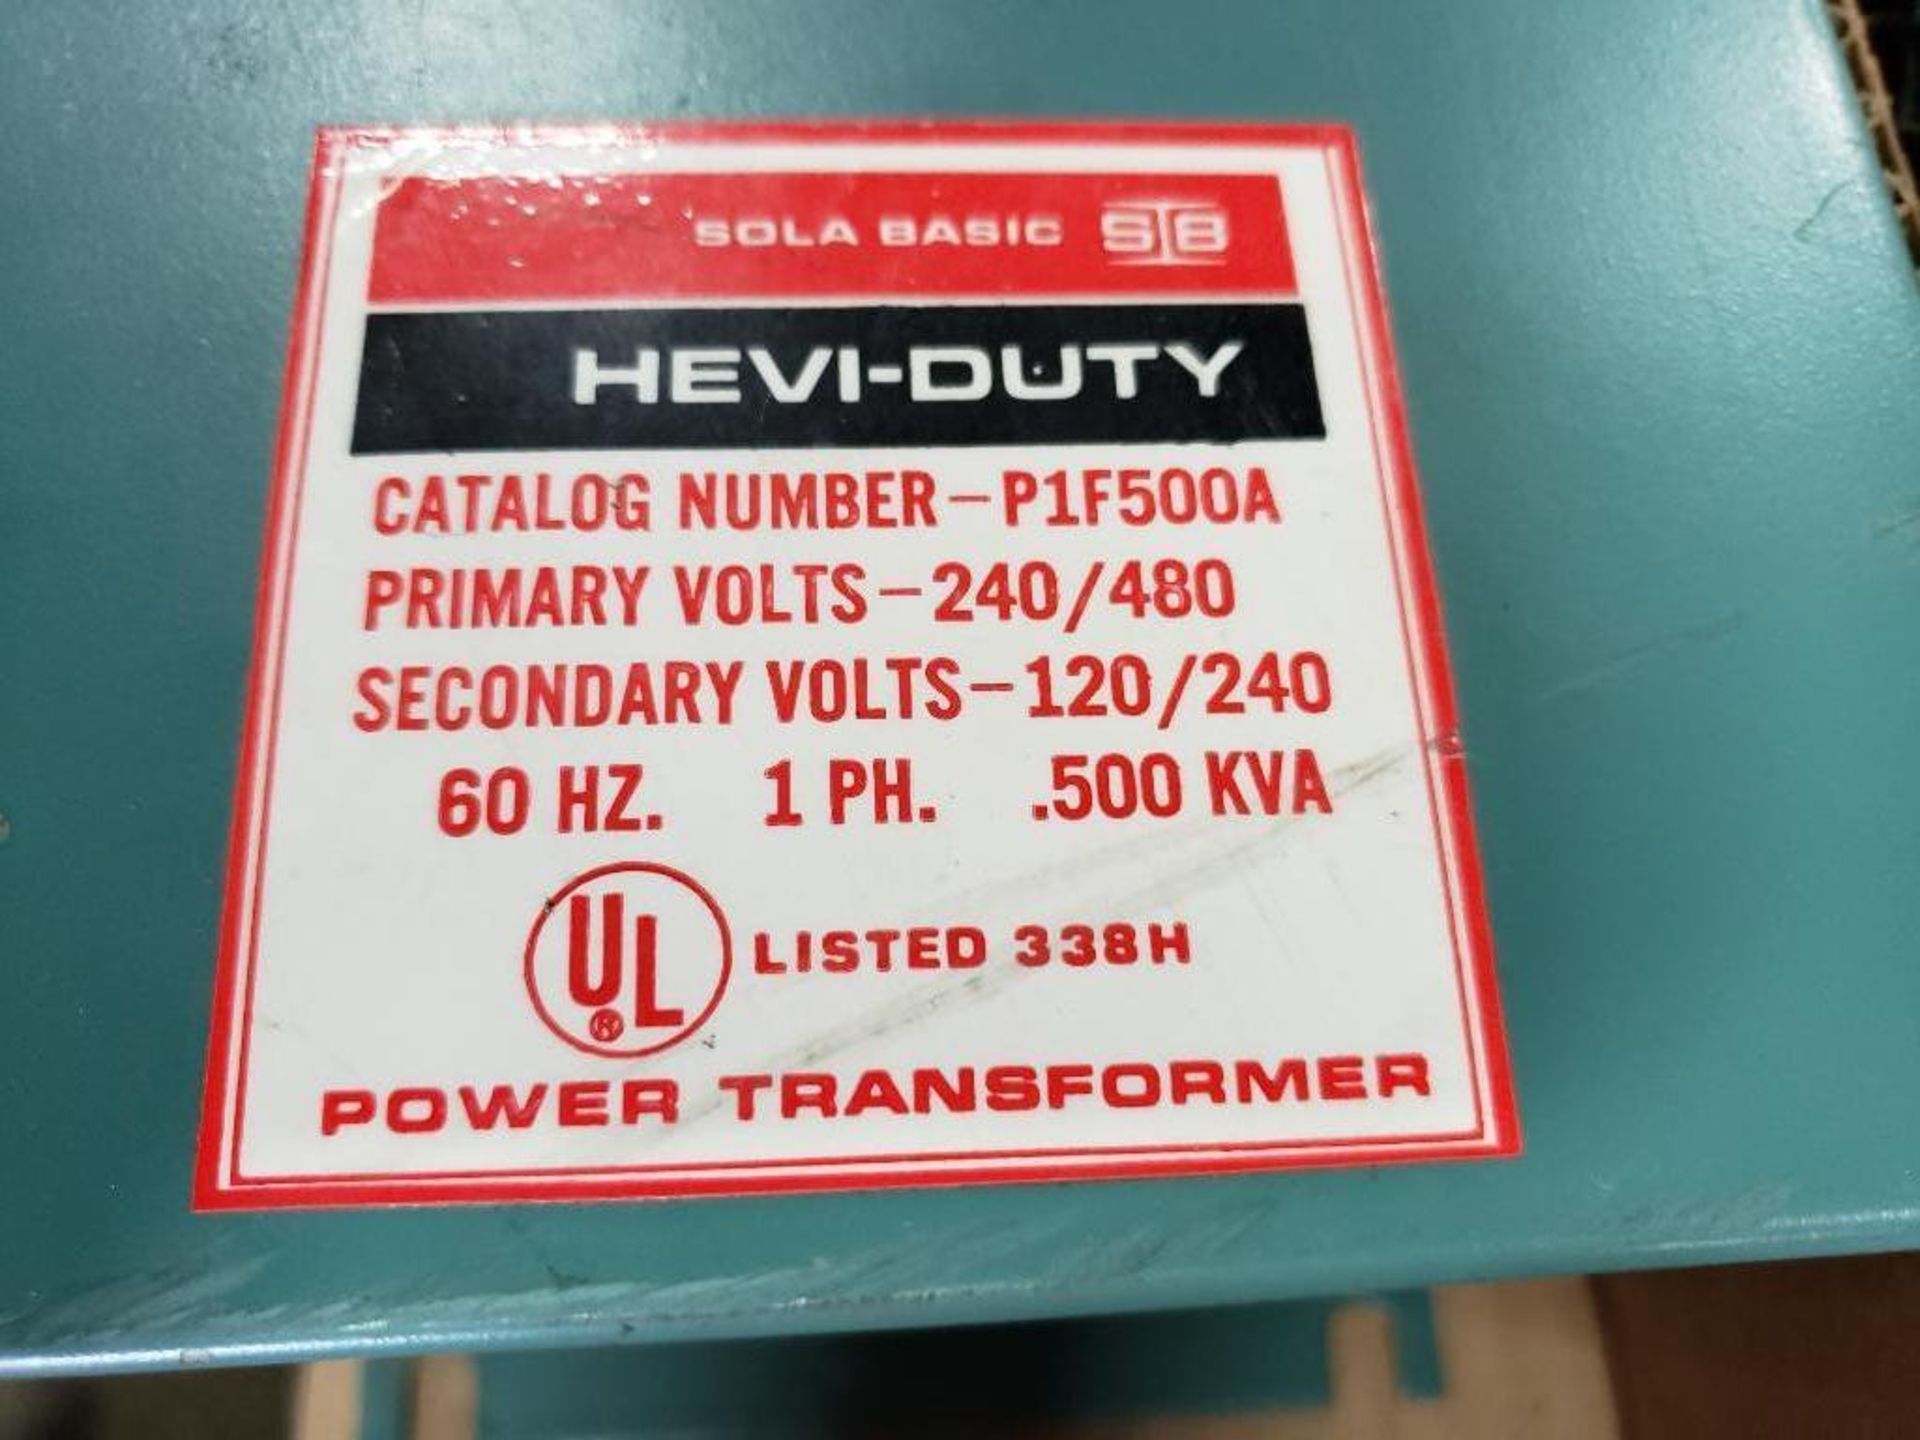 Sola Basic Hevi-Duty power transformer. P1F500A. - Image 3 of 3